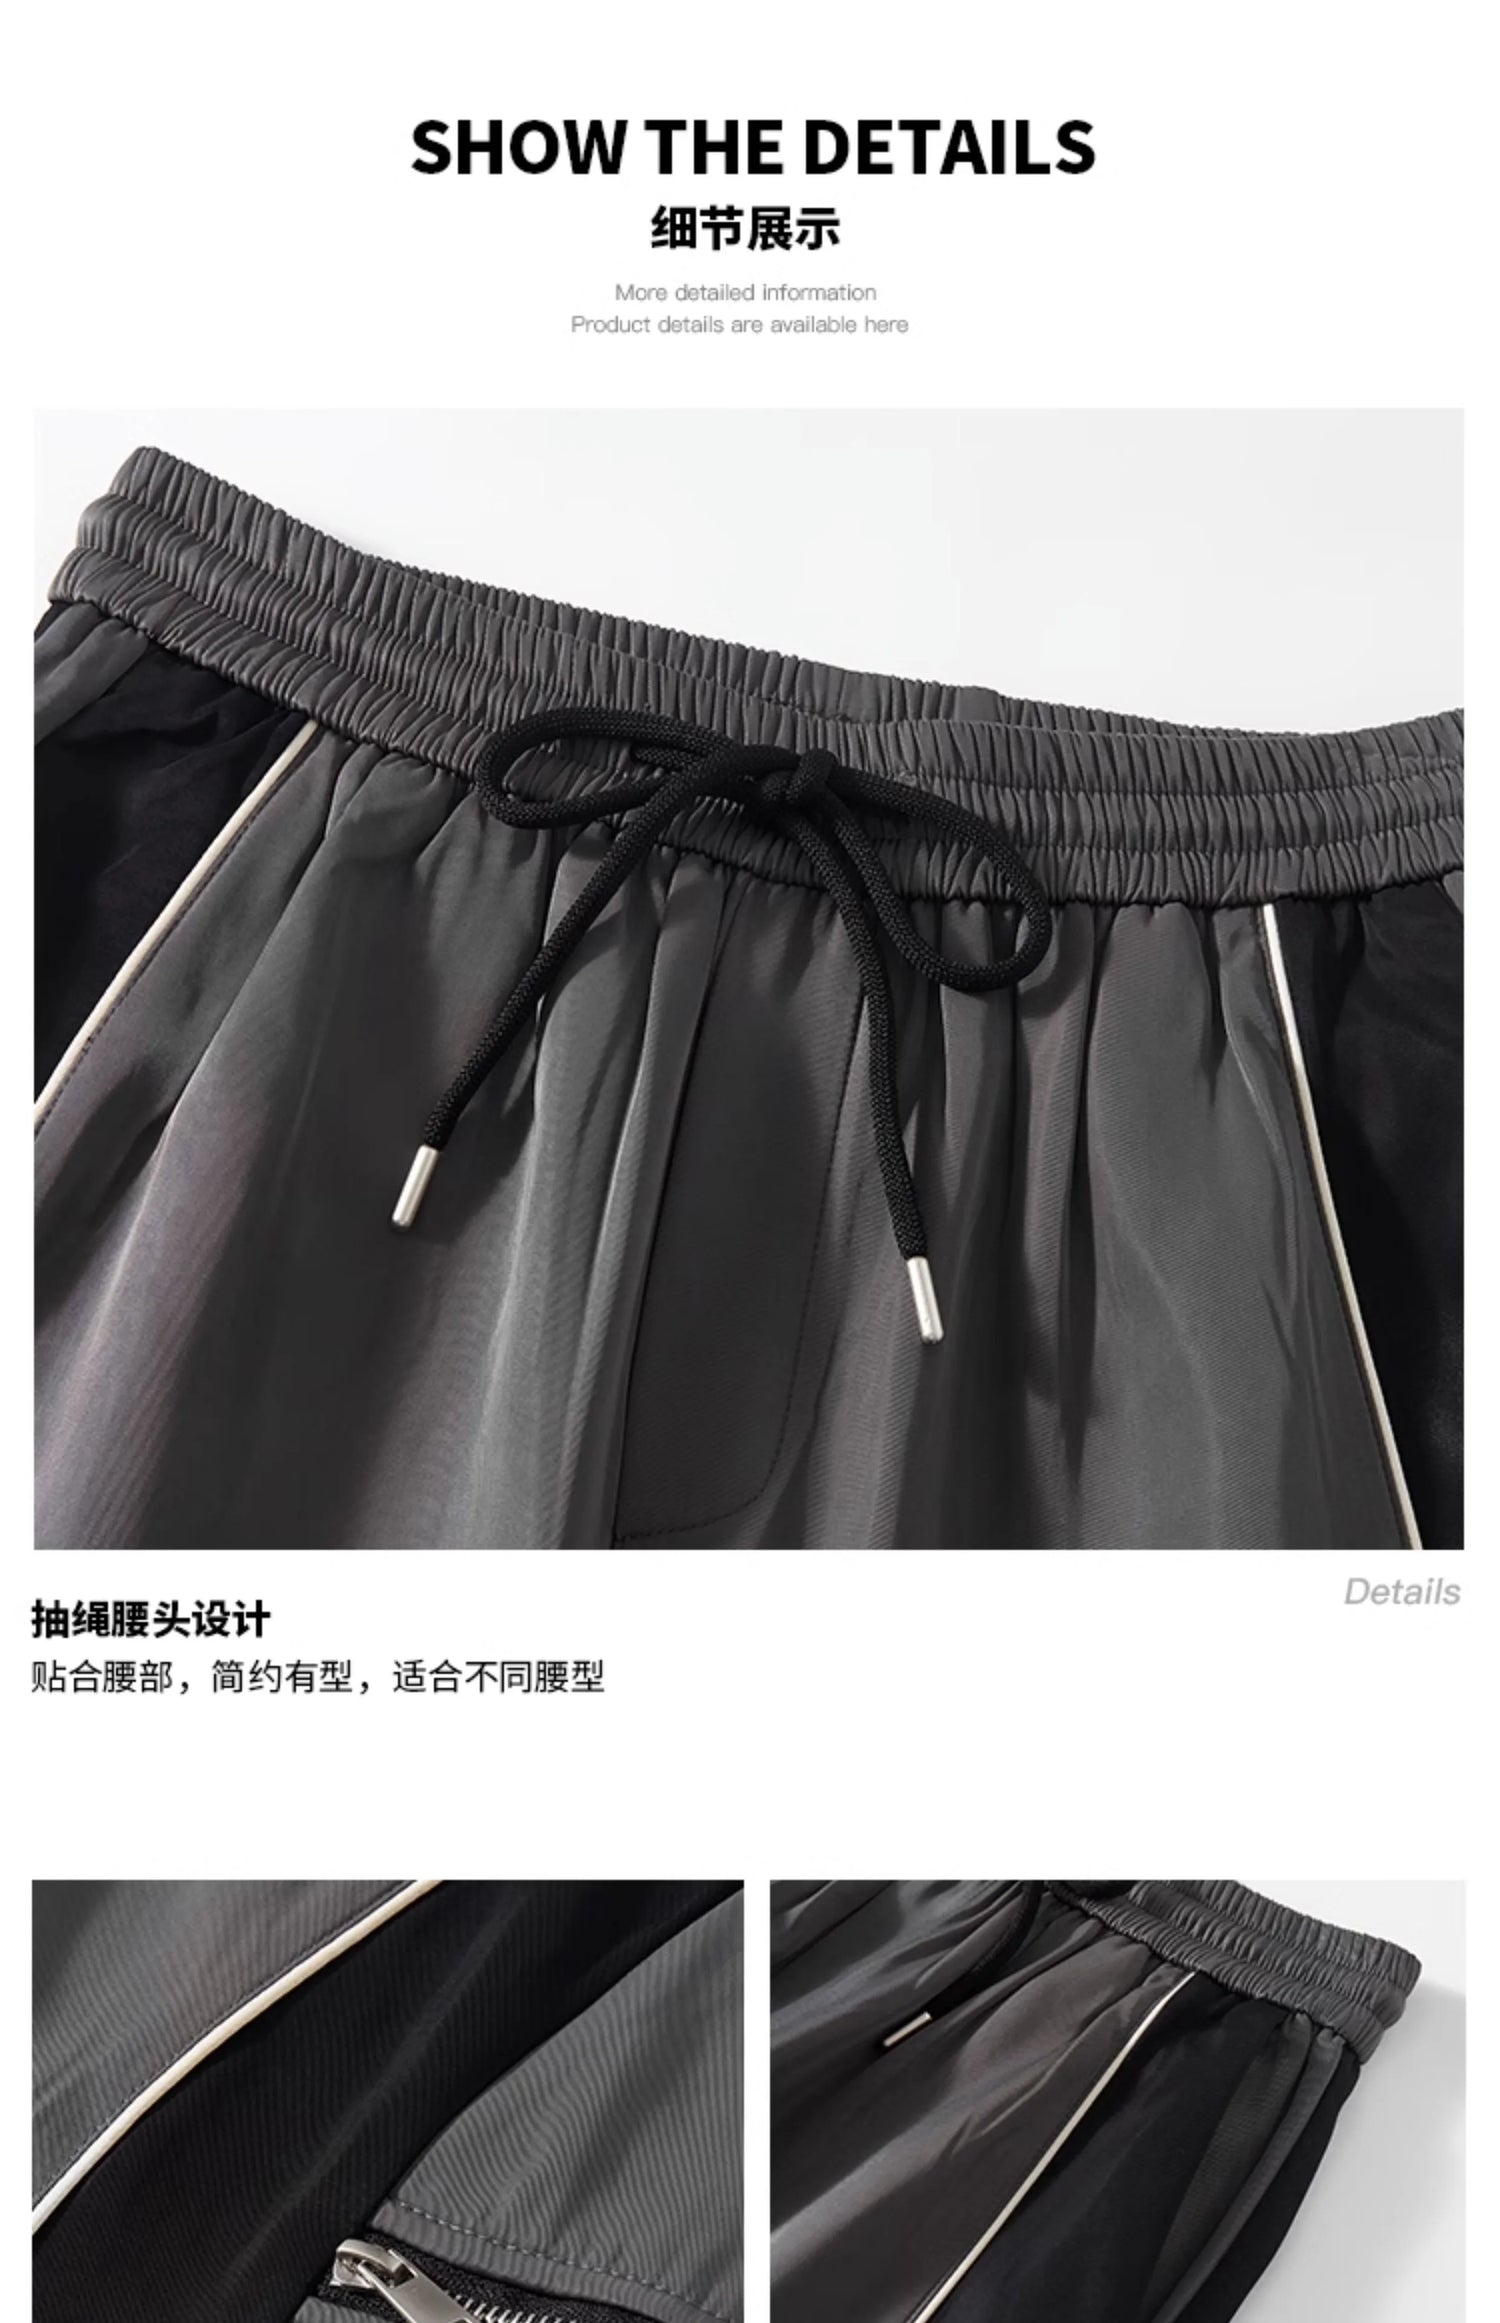 Design Pant  Drawstring Pockets  Chic Punk Pants Baggy Y2K - Eklat Collection